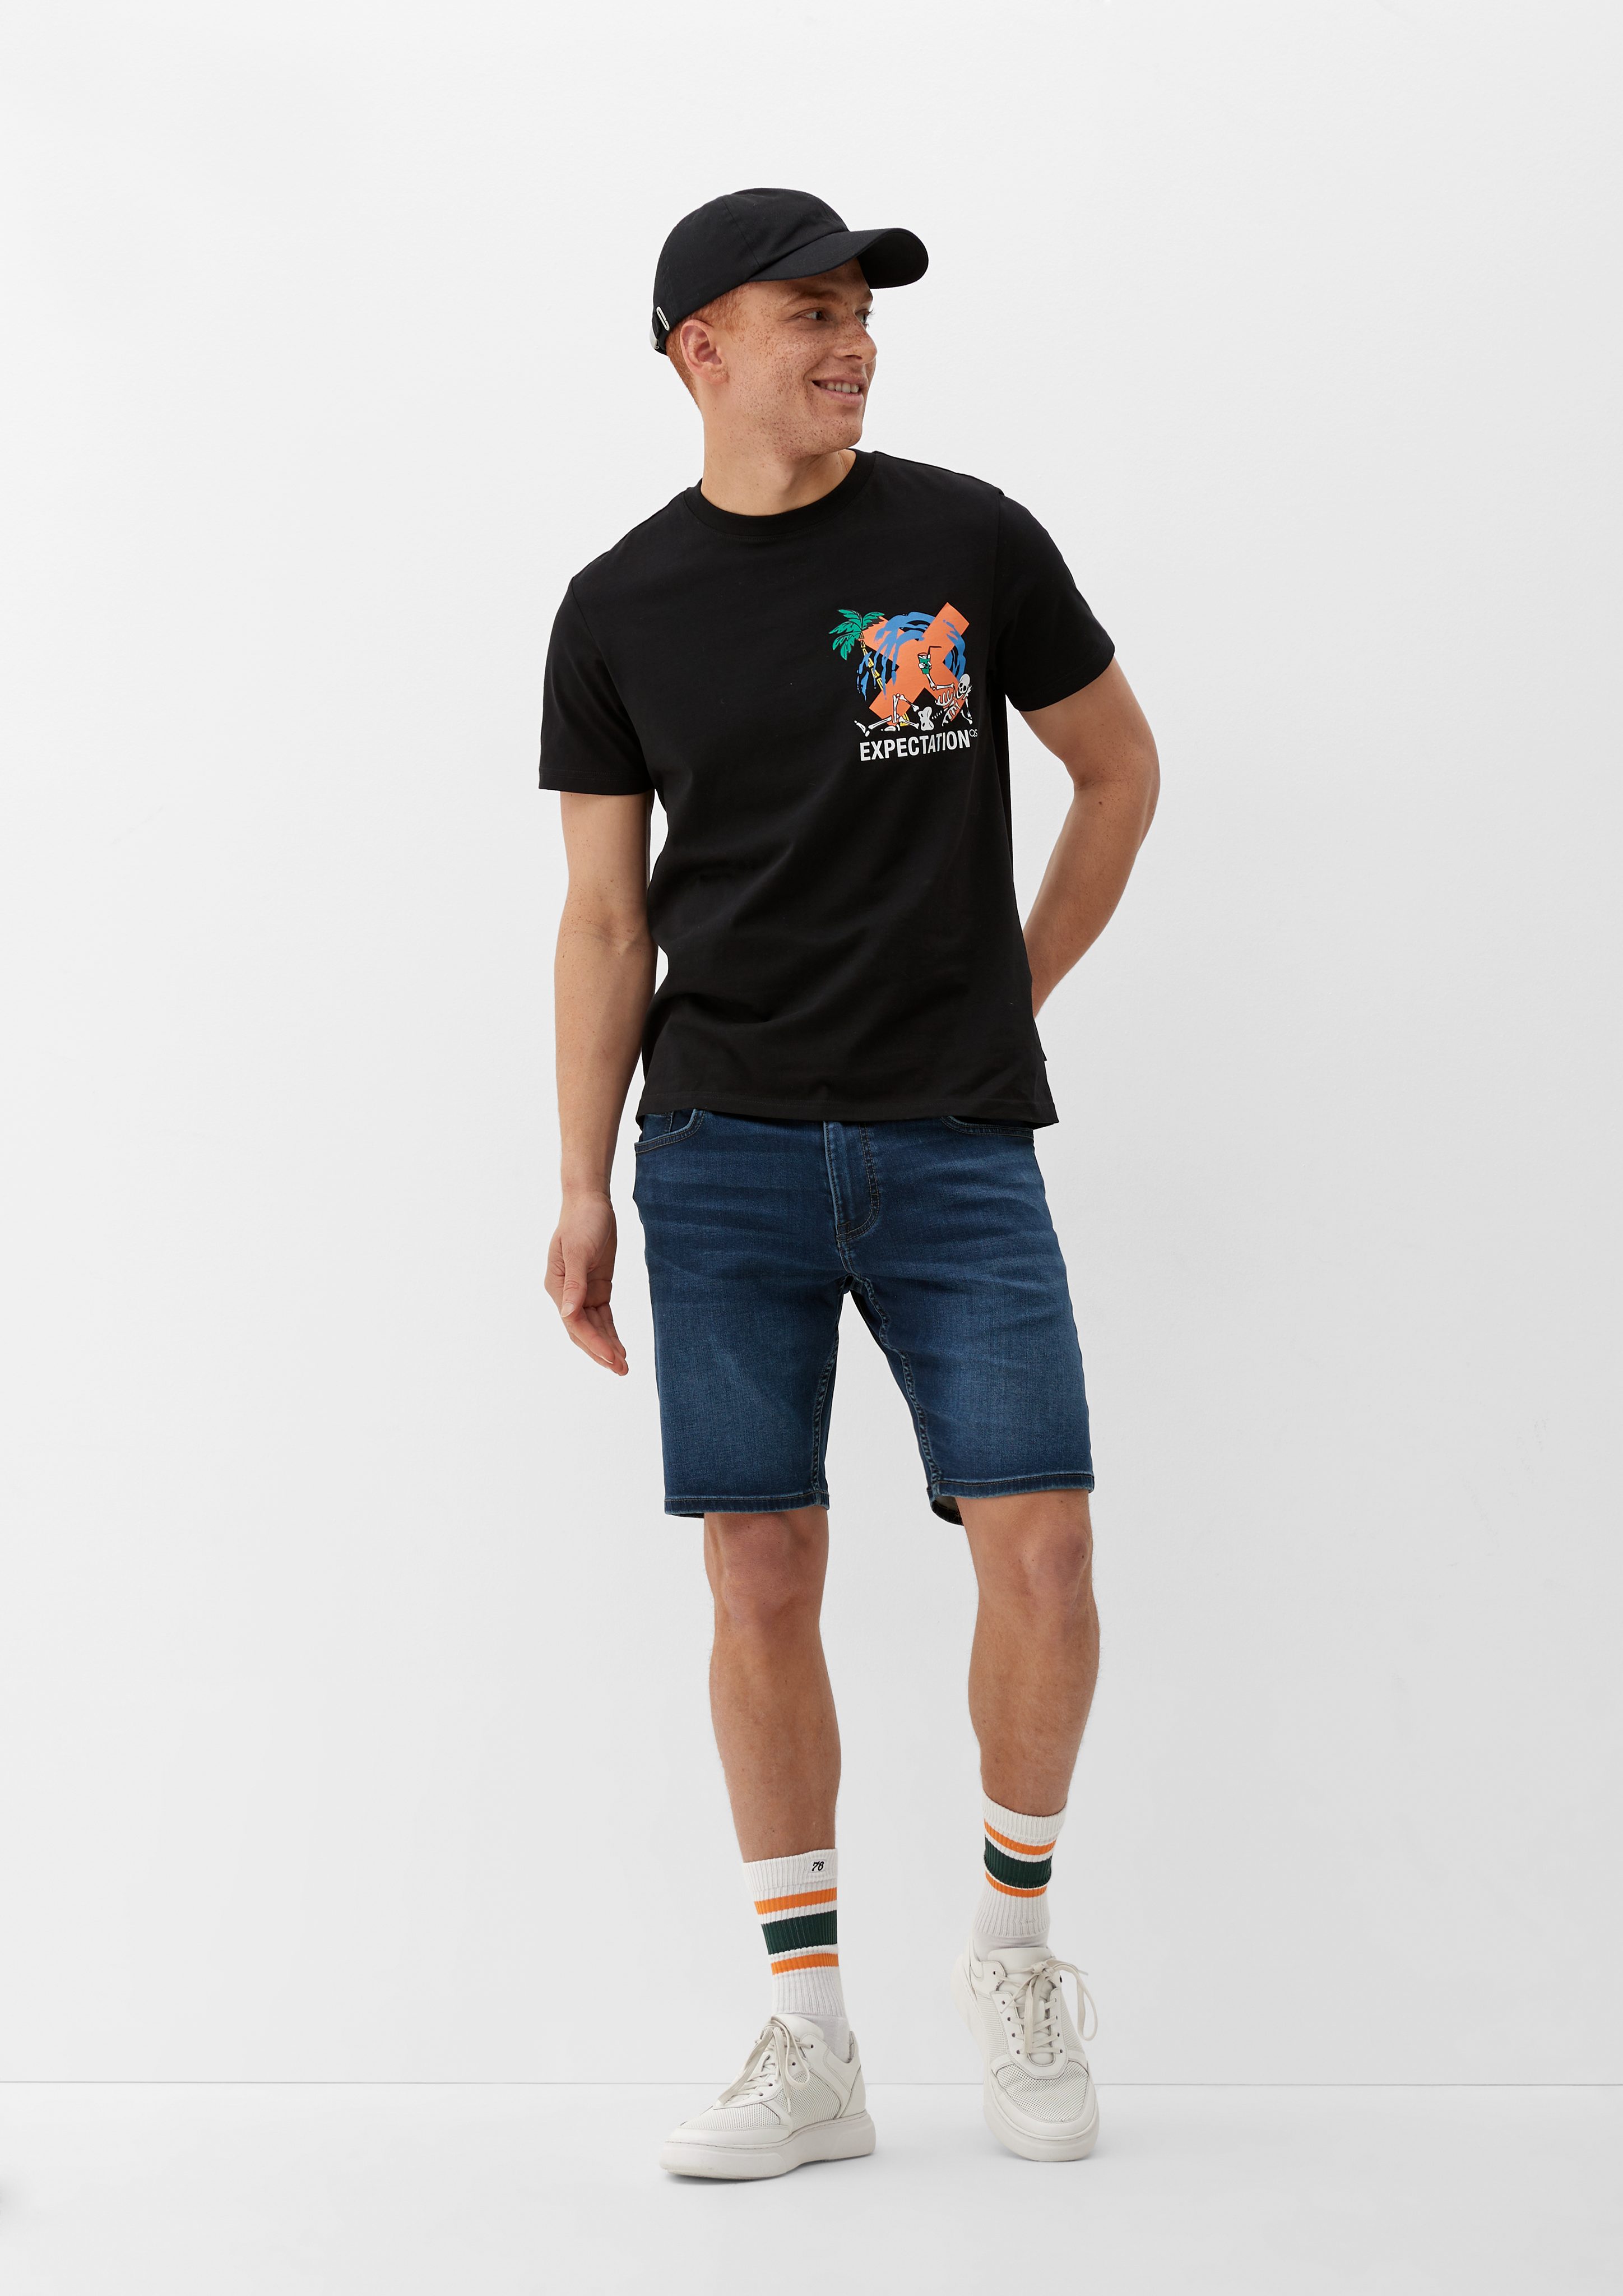 Leg Straight John Waschung s.Oliver Fit / Jeans-Shorts / Mid Rise Jeansshorts Regular / QS ozeanblau